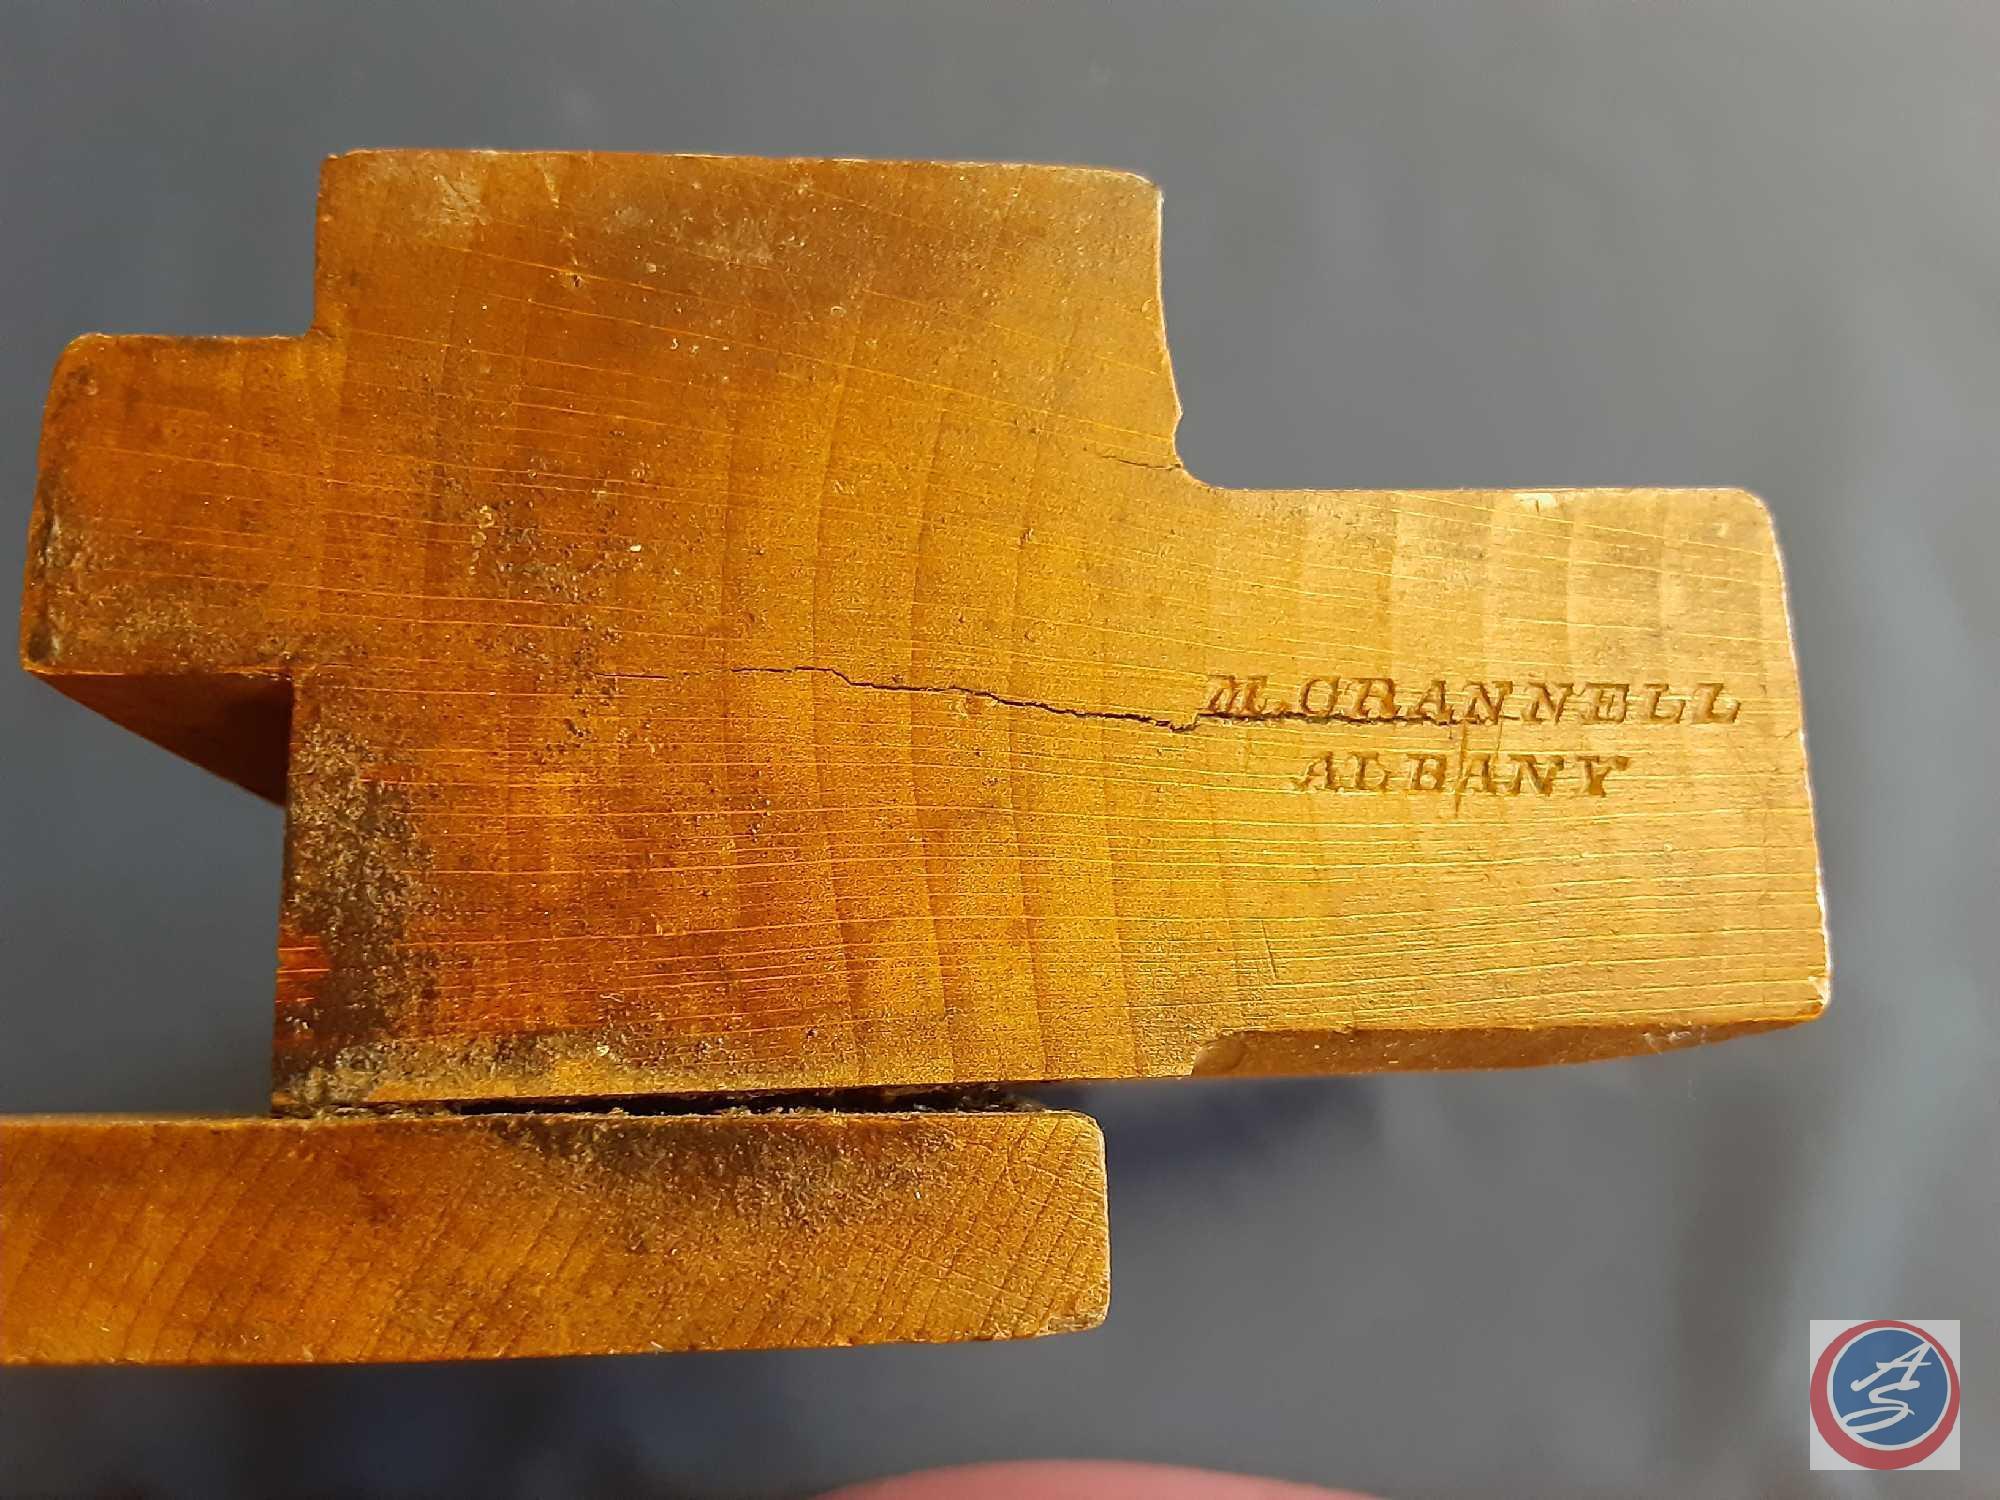 (3) Antique Wood Planes : Ohio tool Co. Columbus 51, DL...Grannell Albany, Ohio Tool Co. 72....